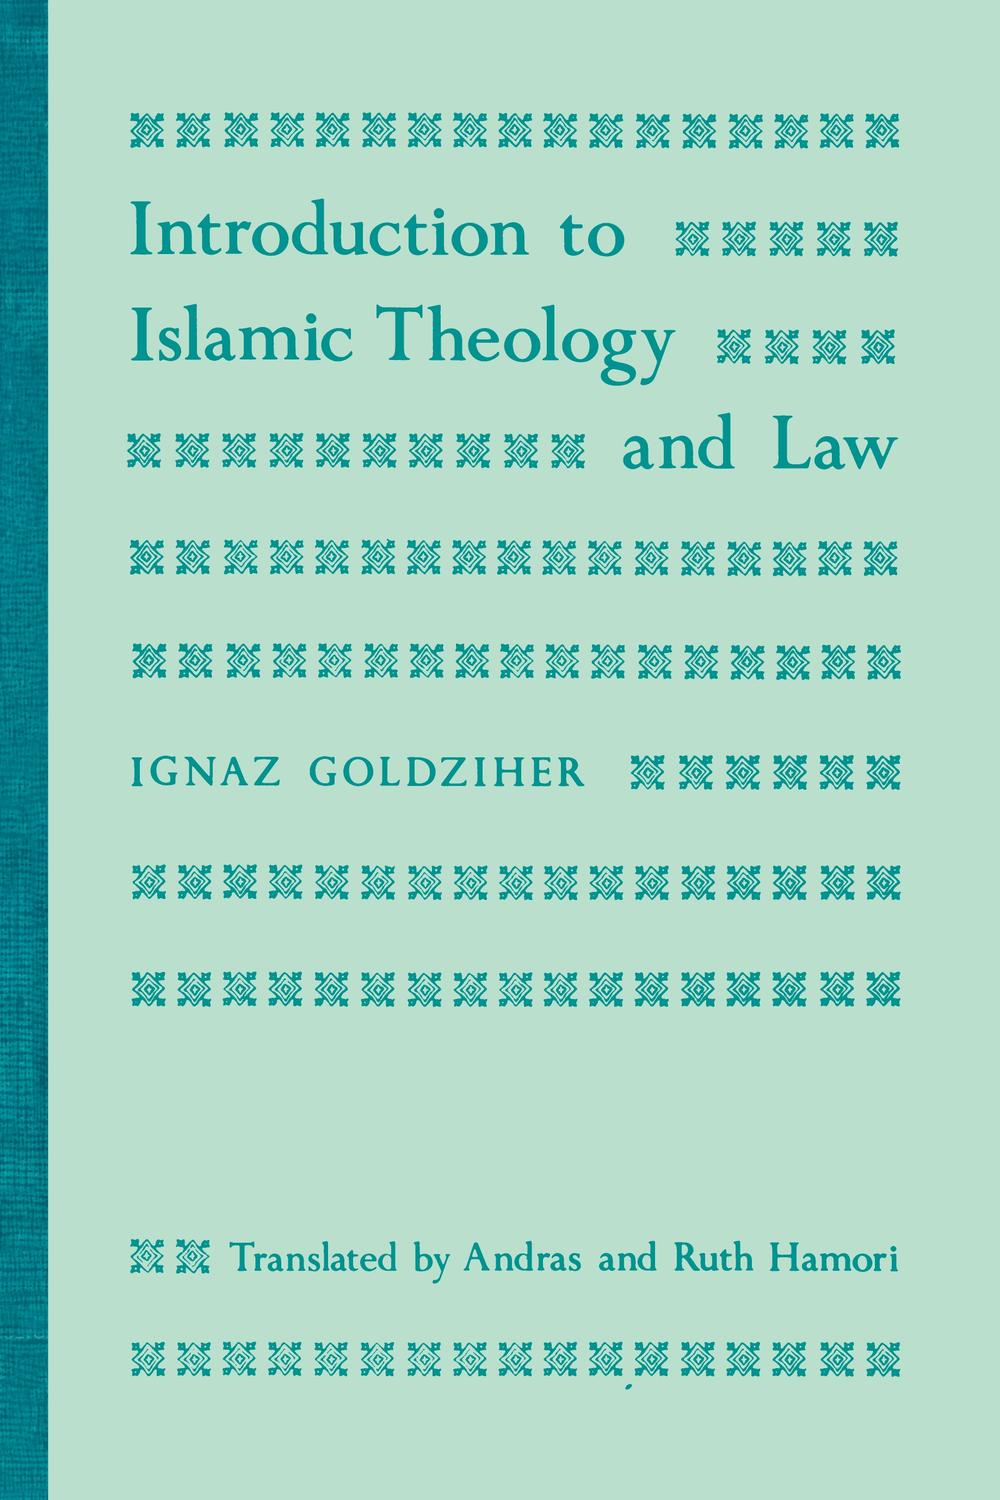 Introduction to Islamic Theology and Law - Ignaz Goldziher,Andras Hamori, Ruth Hamori,